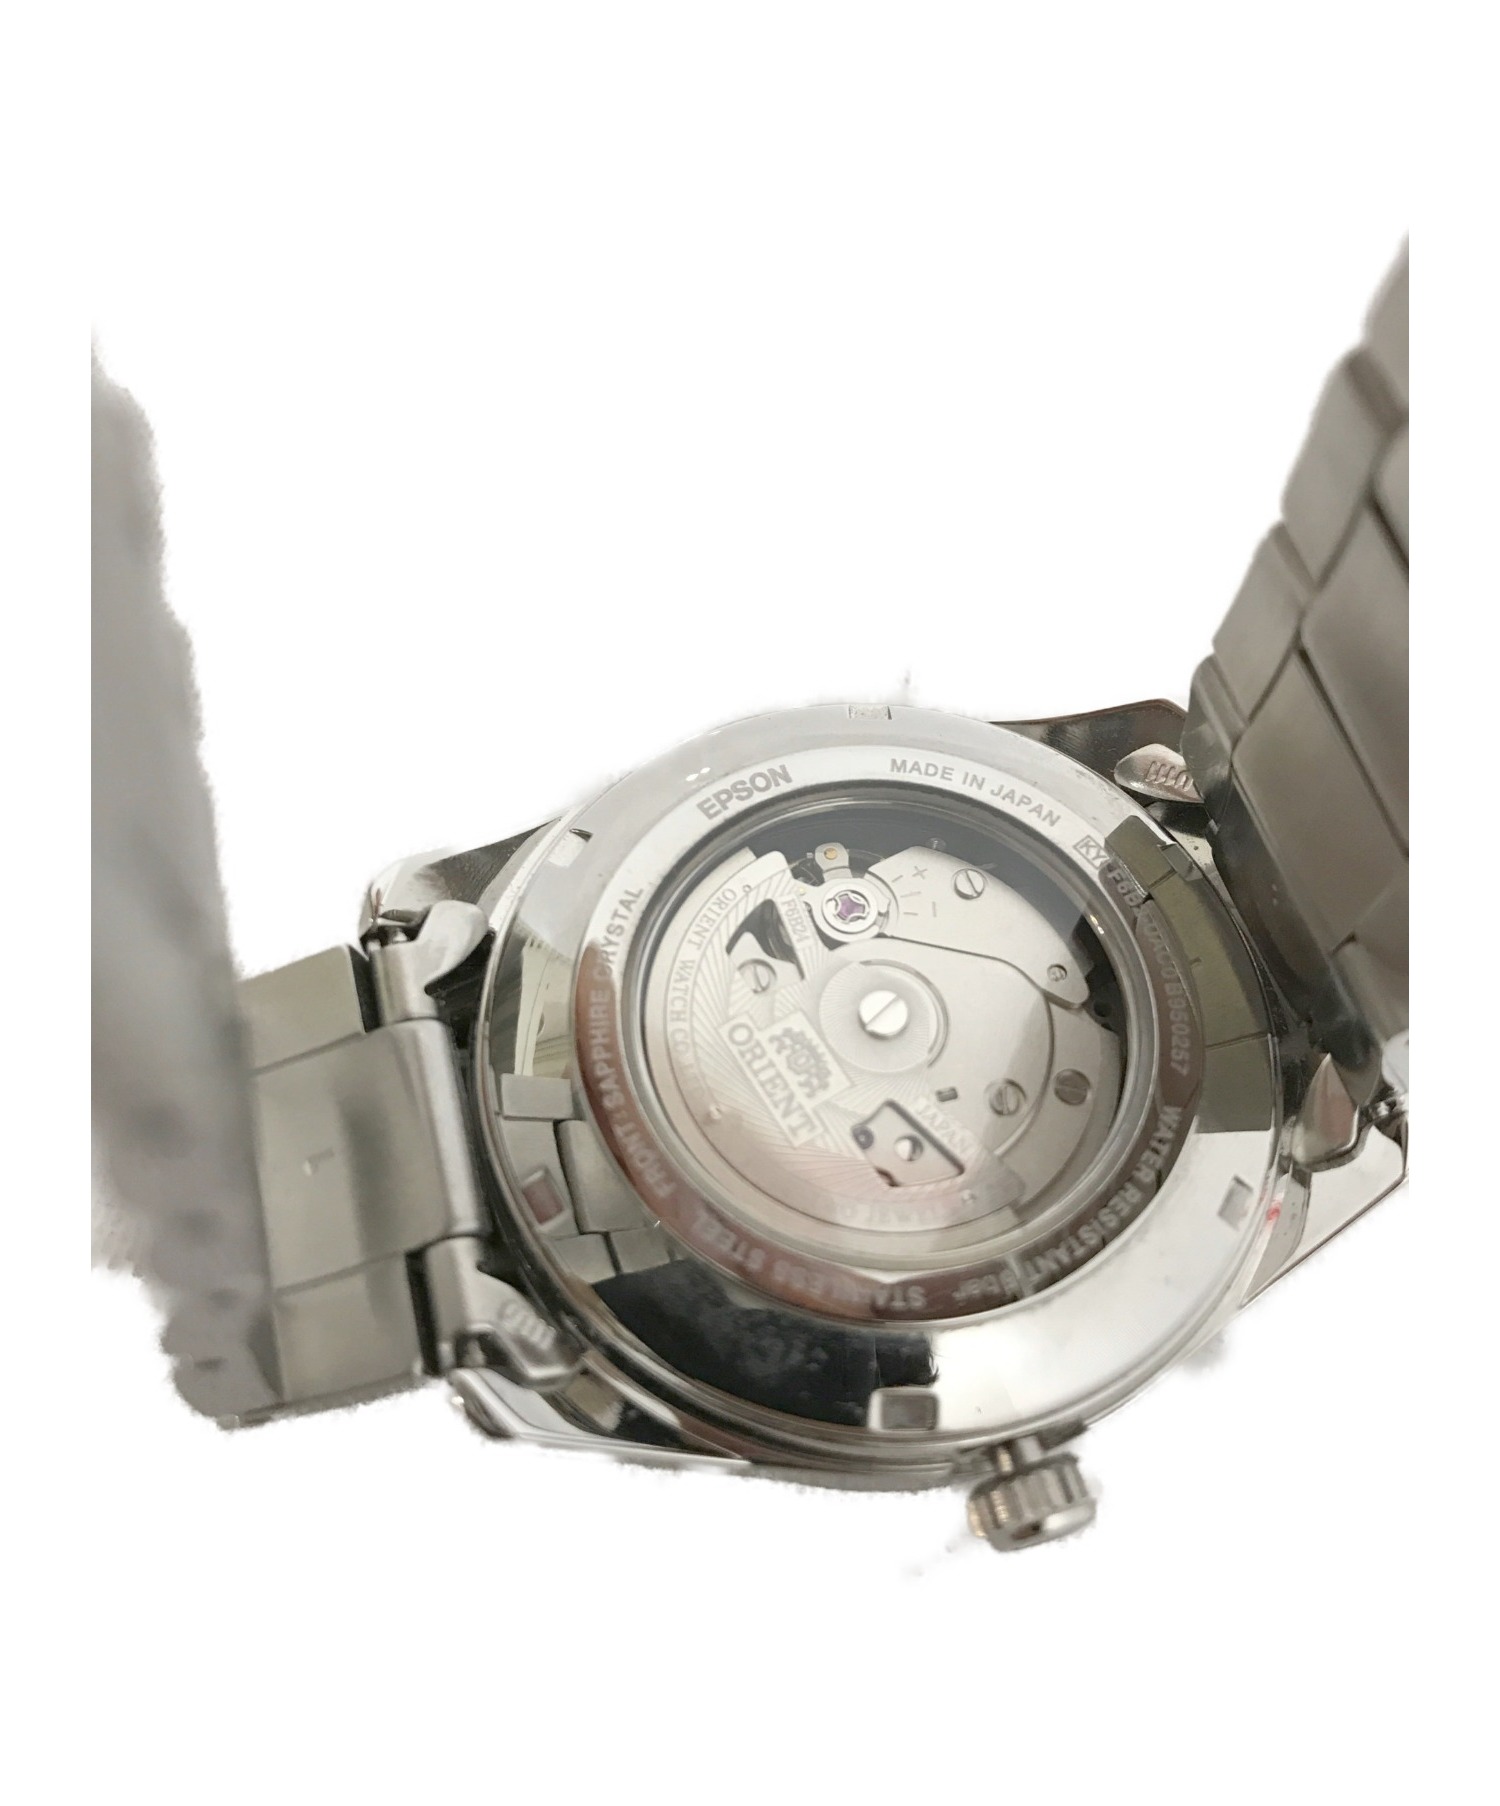 ORIENT (オリエント) 腕時計 ブラック MAM59 自動巻き 動作確認済み